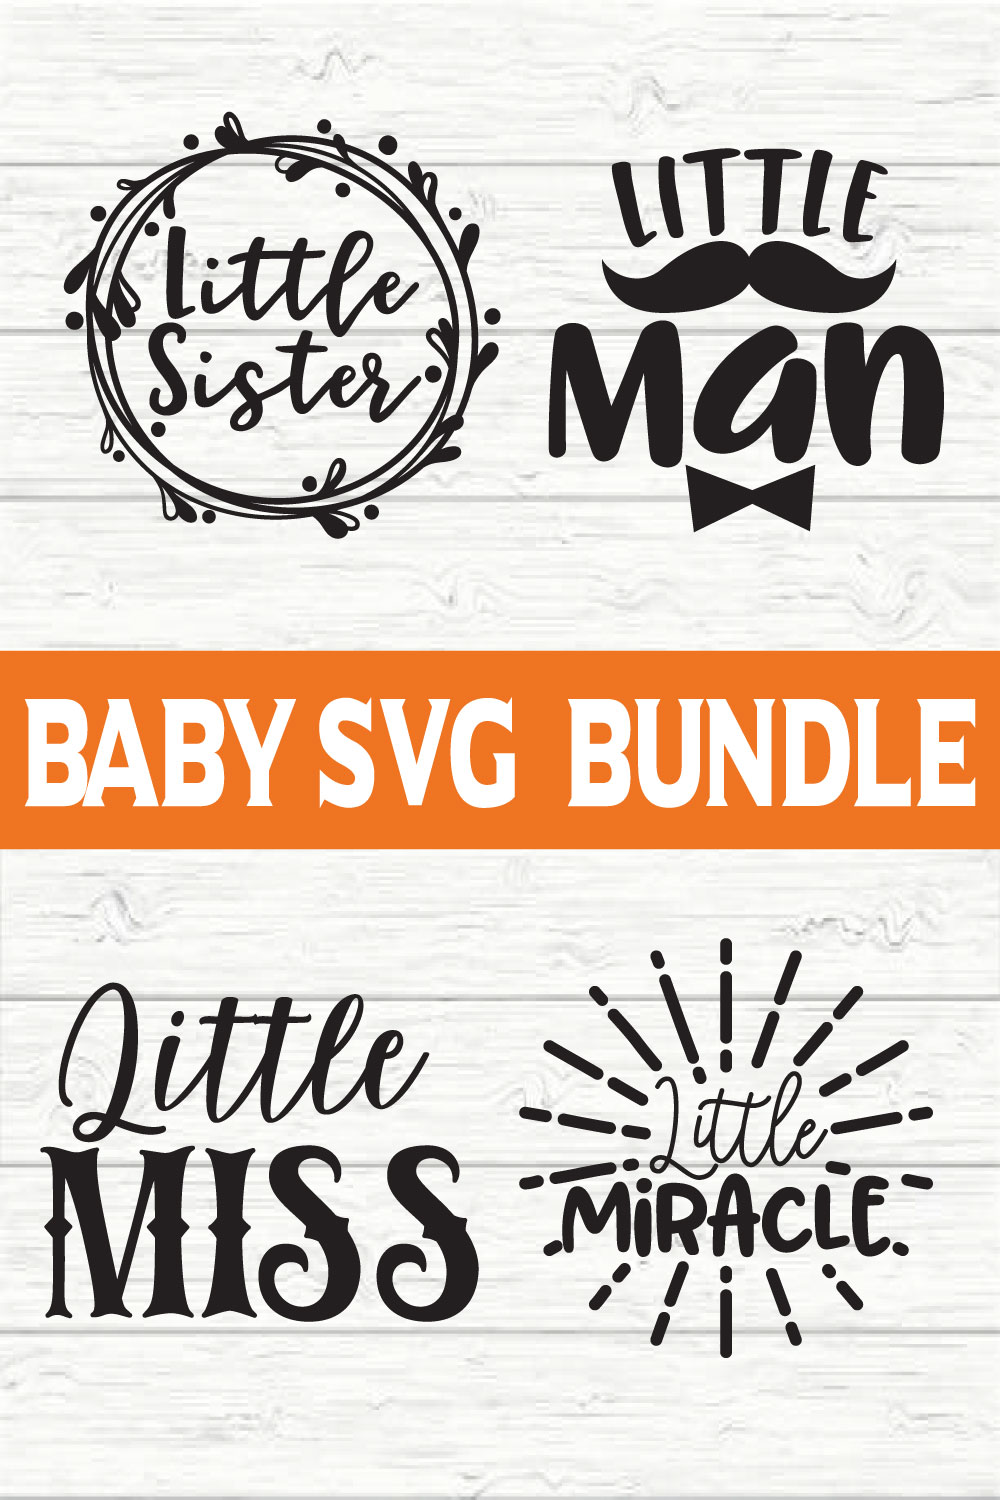 Baby Typography Design Bundle vol 6 pinterest preview image.